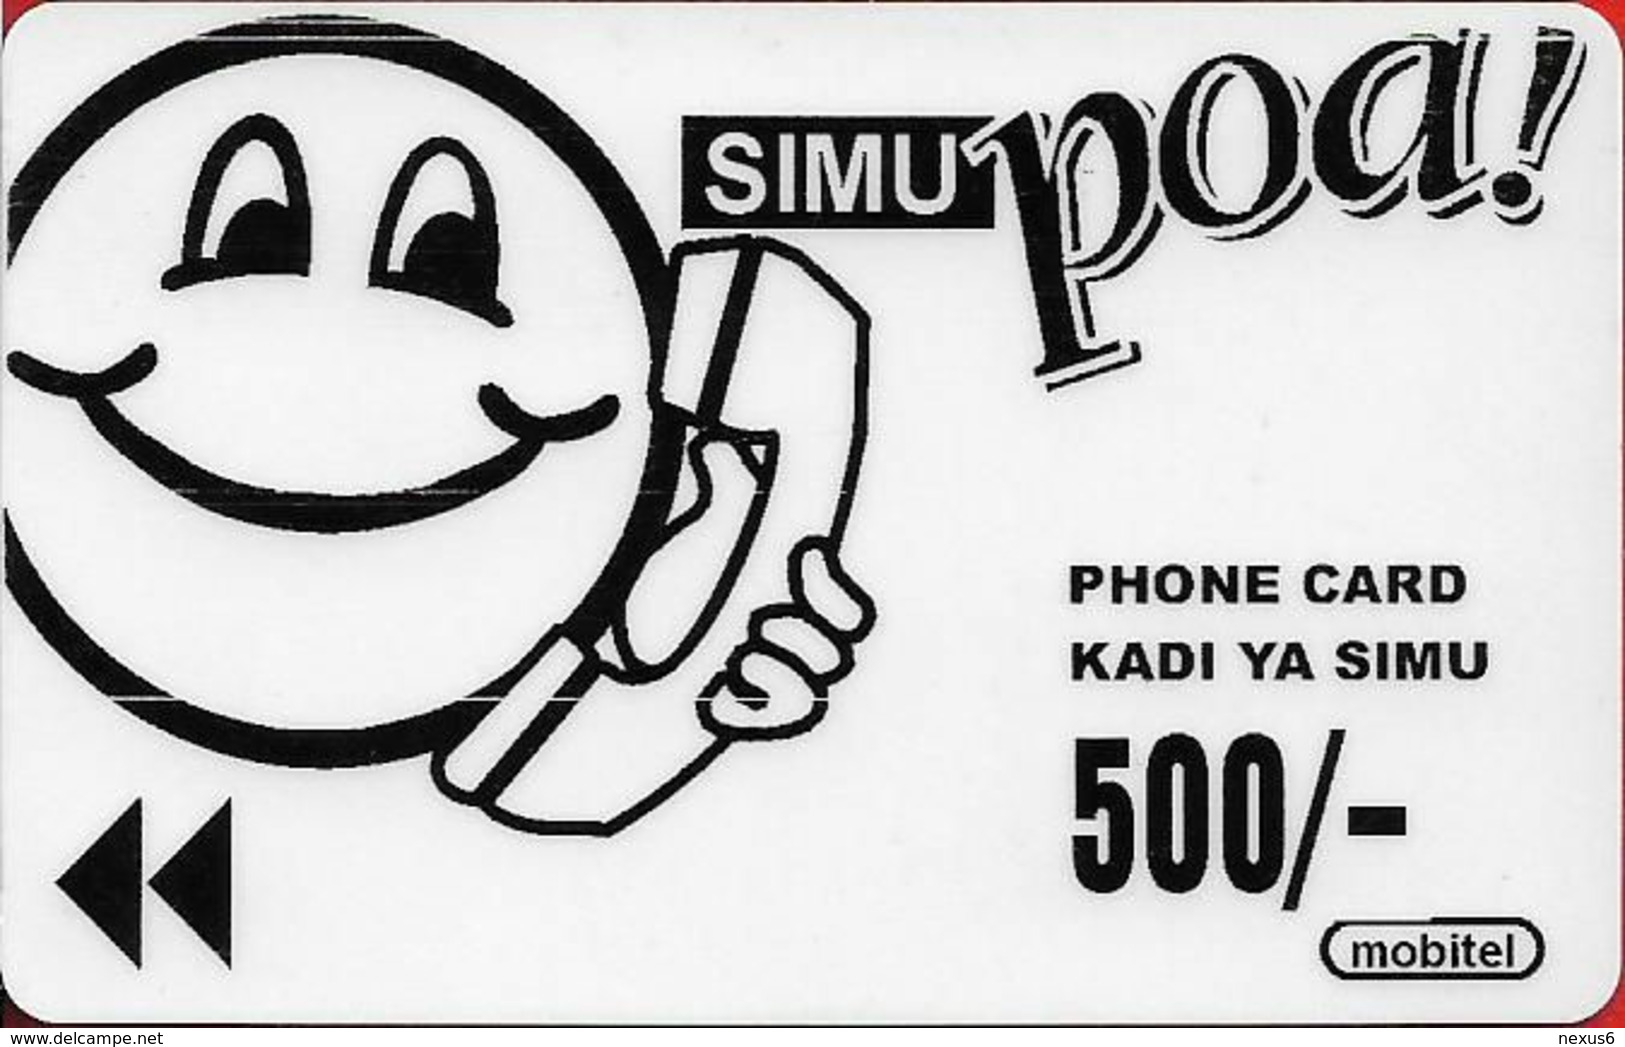 Tanzania - Mobitel Mic (Magnetic) - Simu Poa! Phone Card (White), 500Tsh, Used - Tanzanie